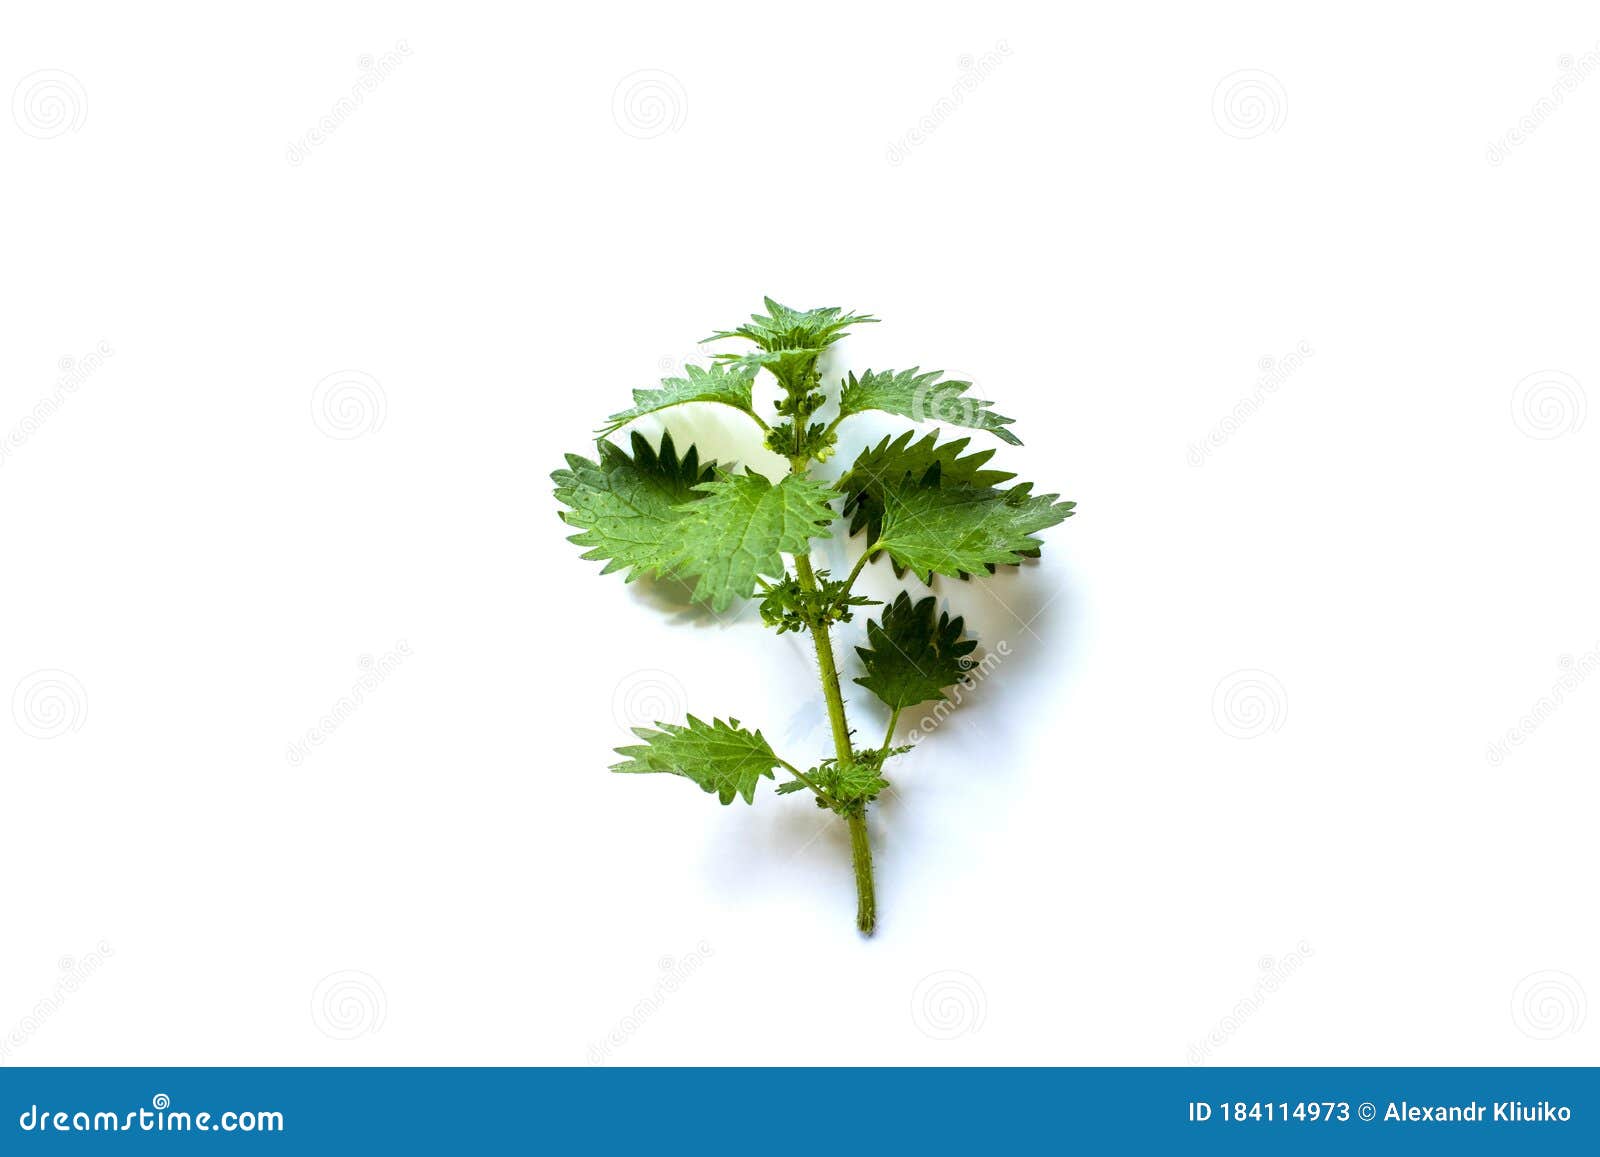 Leaf of Nettle on White Background. Nettle Plant Isolated Stock Image ...